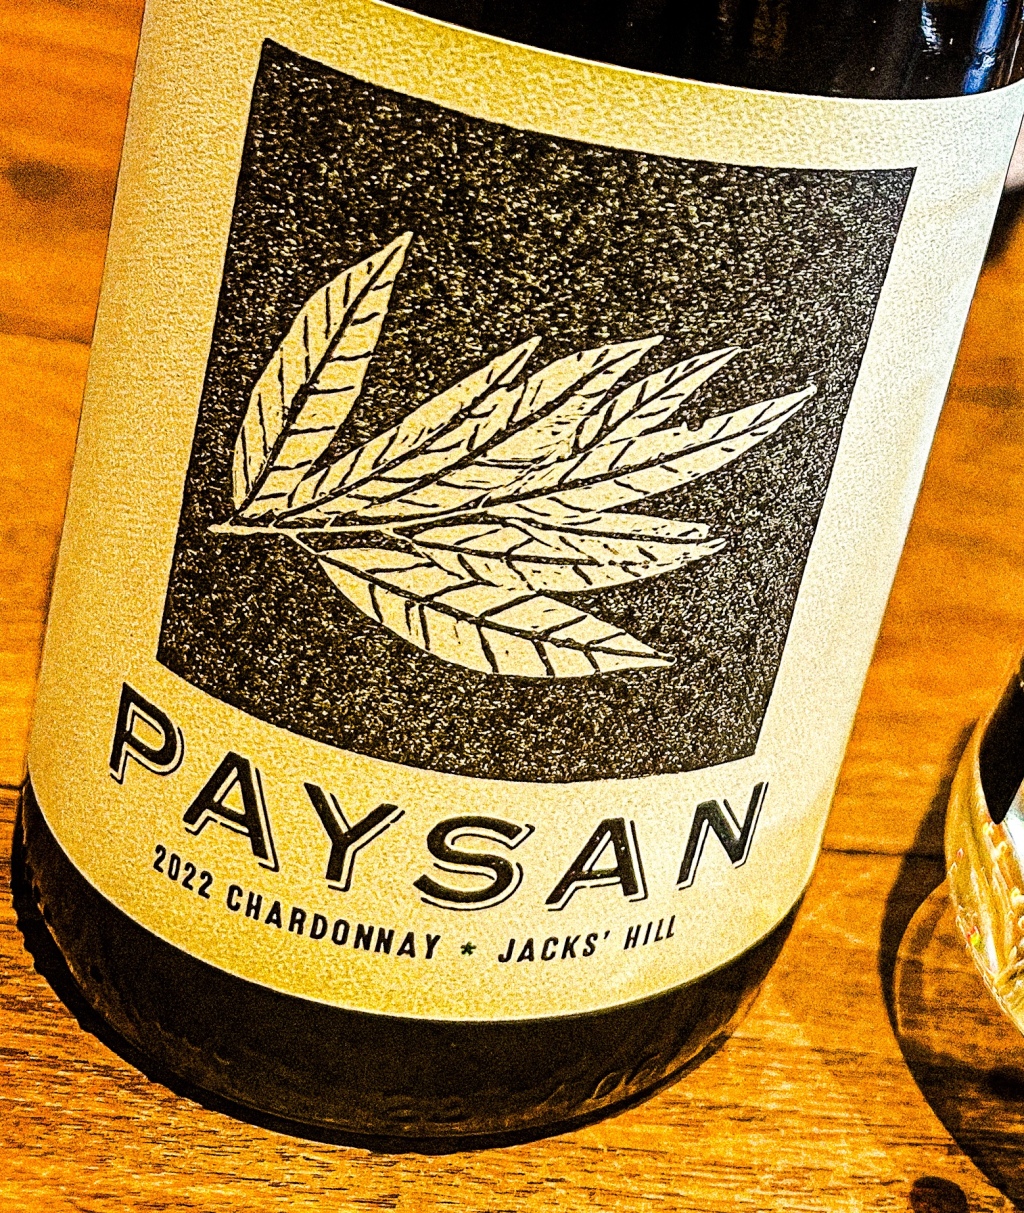 Le P’tit Paysan, Jack’s Hill 2022 Chardonnay